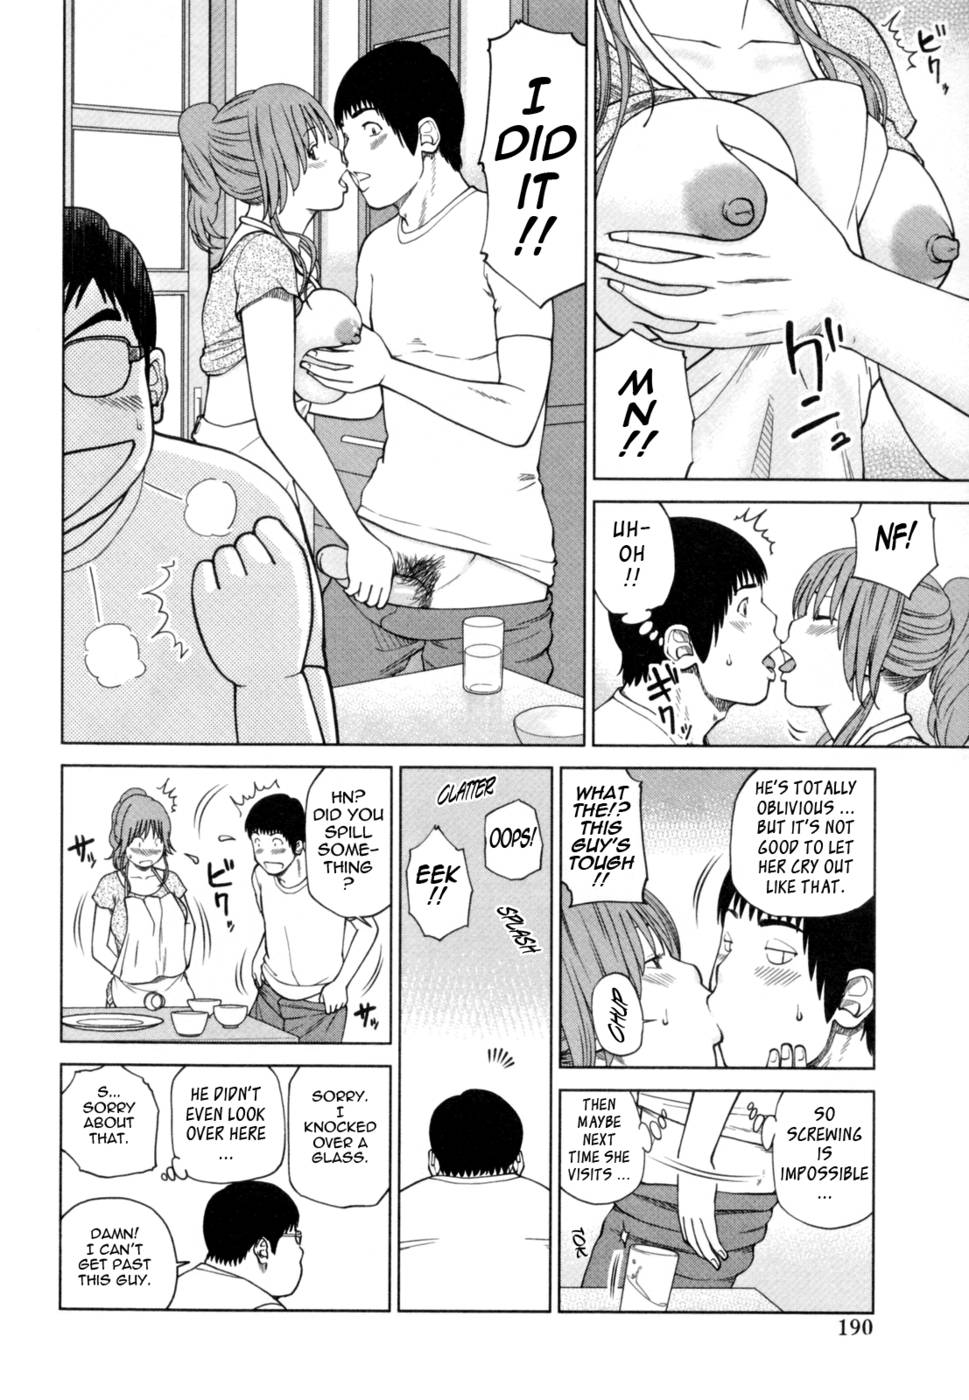 32 Year Old Unsatisfied Wife-Chapter 10-The Wife Next Door-Hentai Manga Hentai Comic photo